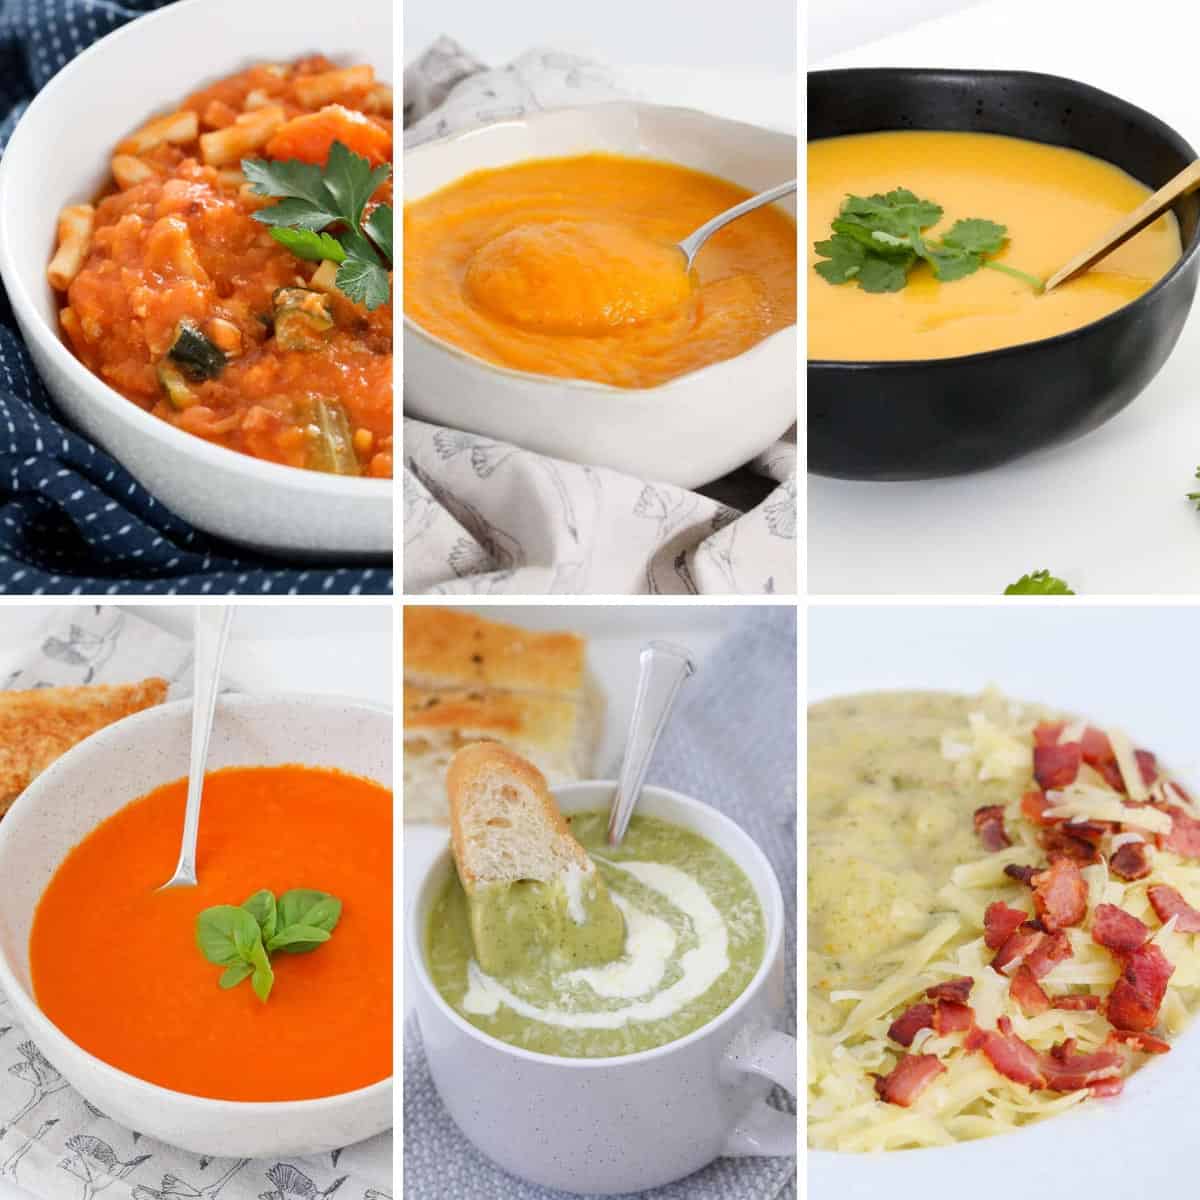 https://bakeplaysmile.com/wp-content/uploads/2022/06/TM-Soup-Recipes-1.jpg